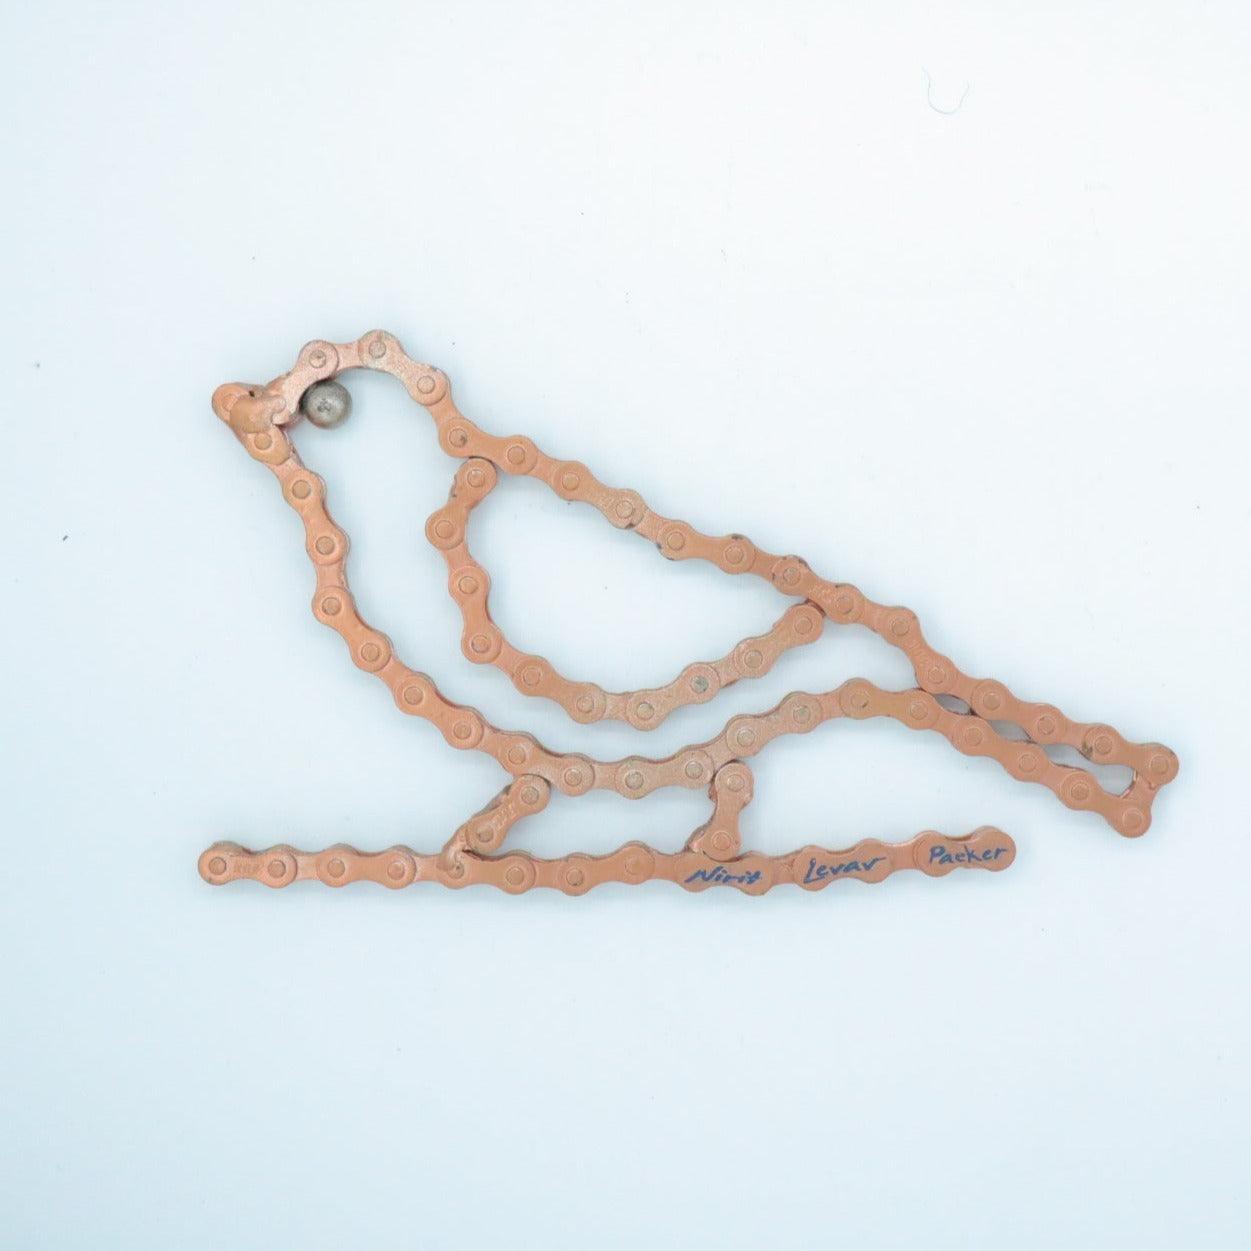 Bird Sculpture (Lilu) | UNCHAINED by NIRIT LEVAV PACKER